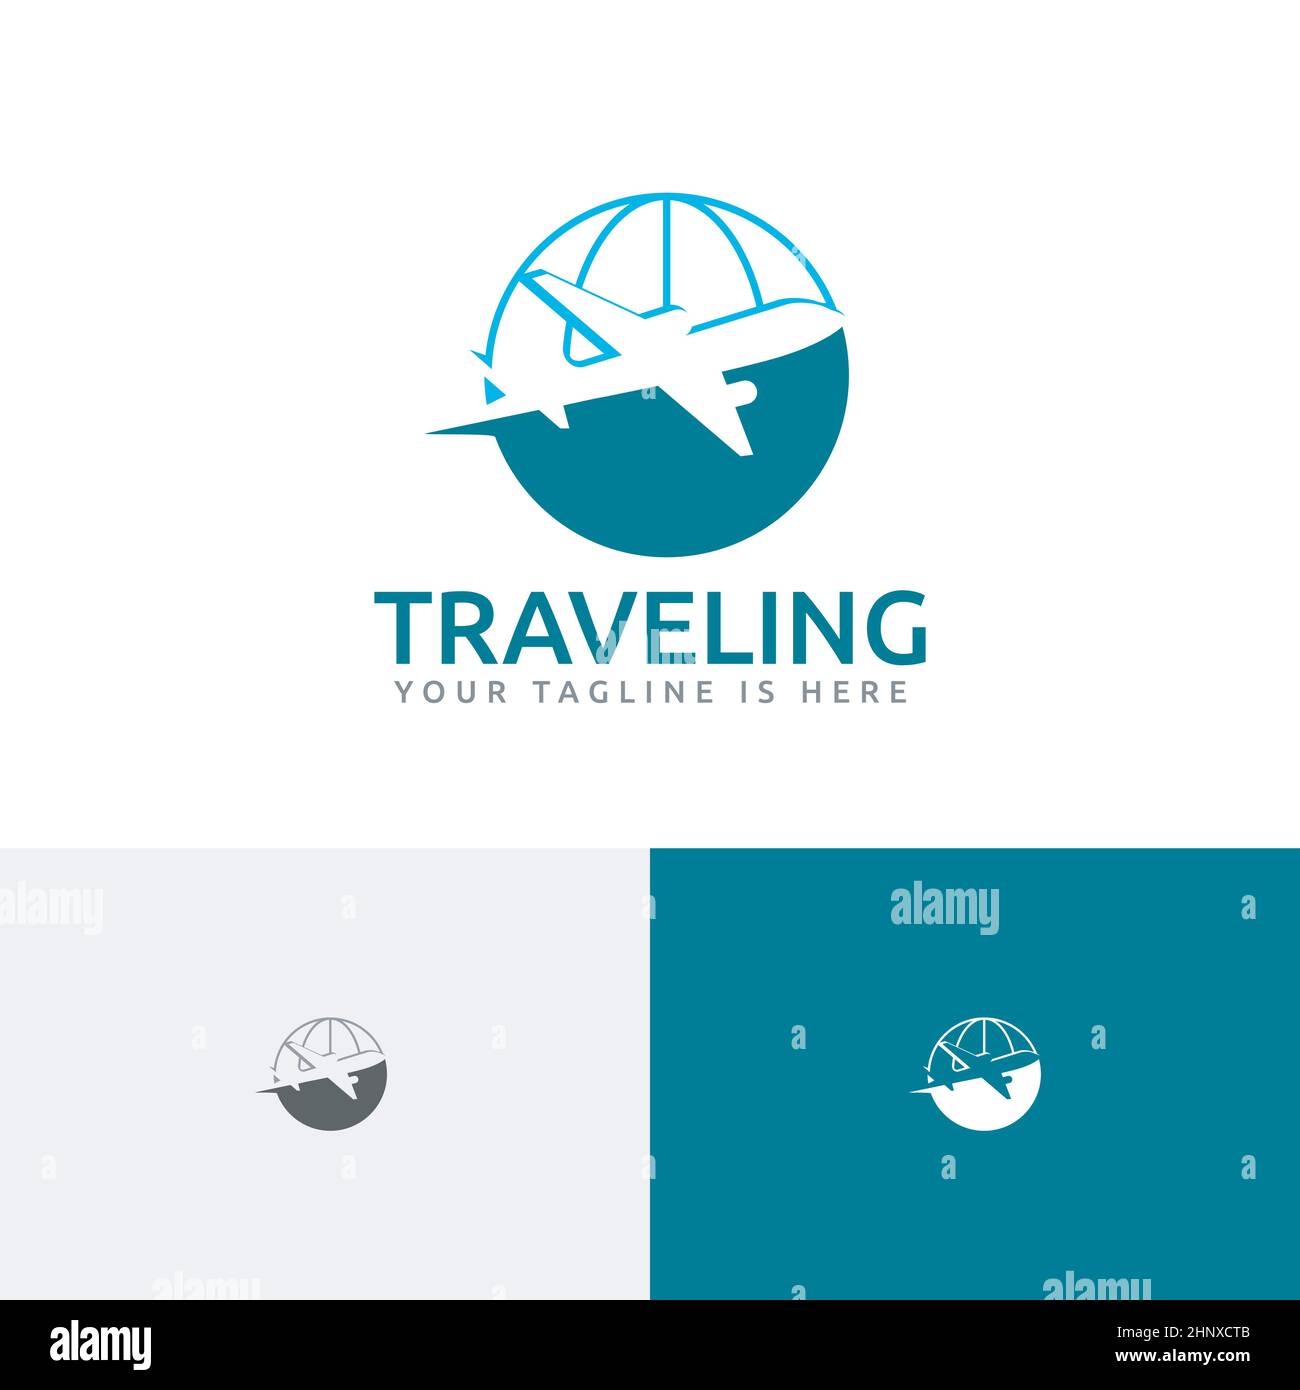 World Globe Flight Plane Tour Travel Holiday Vacation Agency Logo Illustrazione Vettoriale